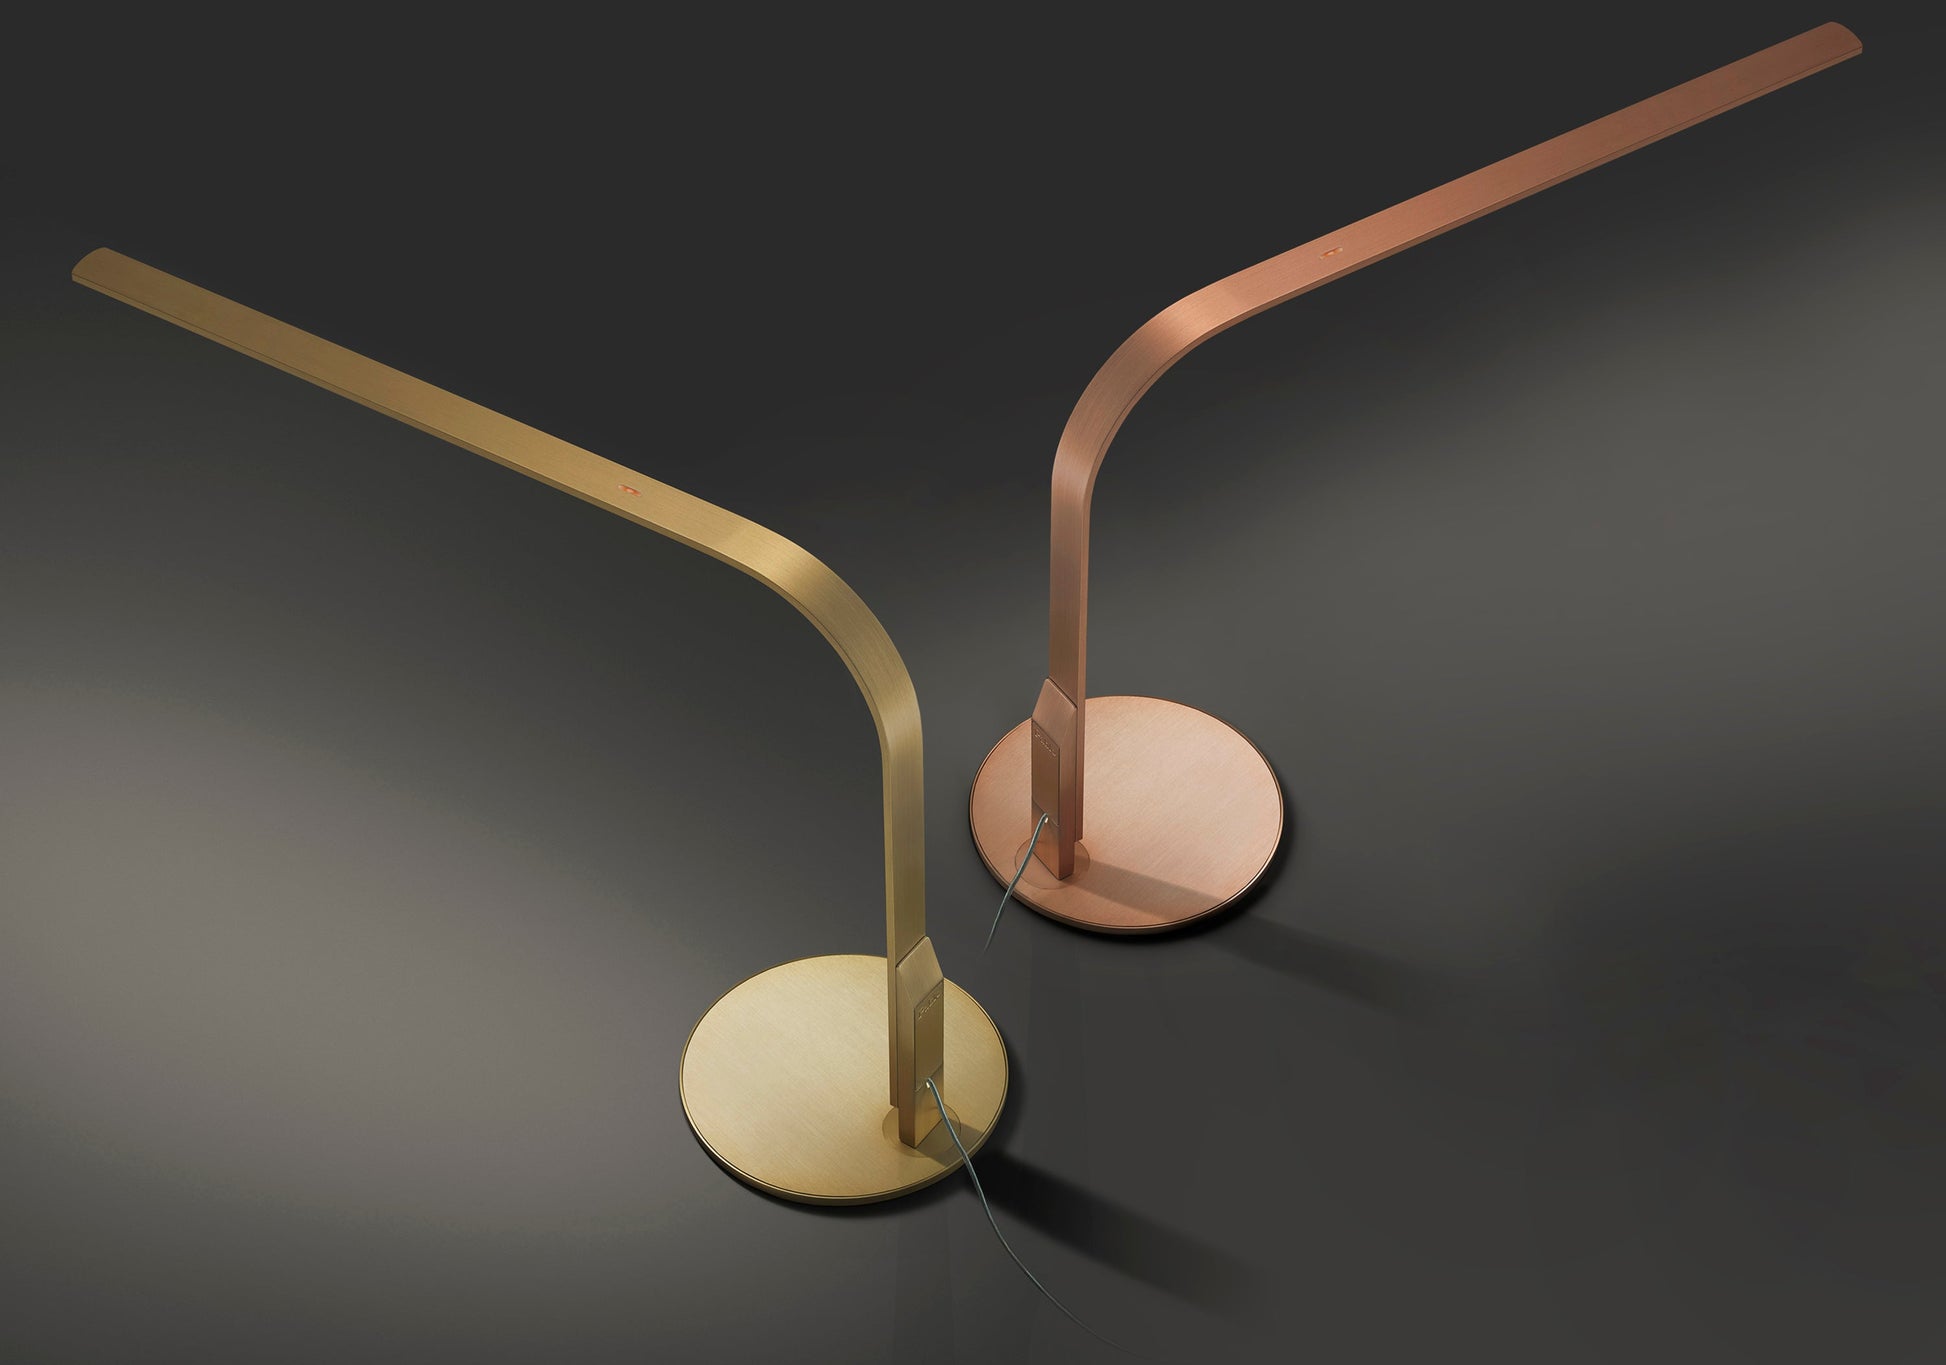 Pablo Design Lim 360 Led Table Lamp Usb Port